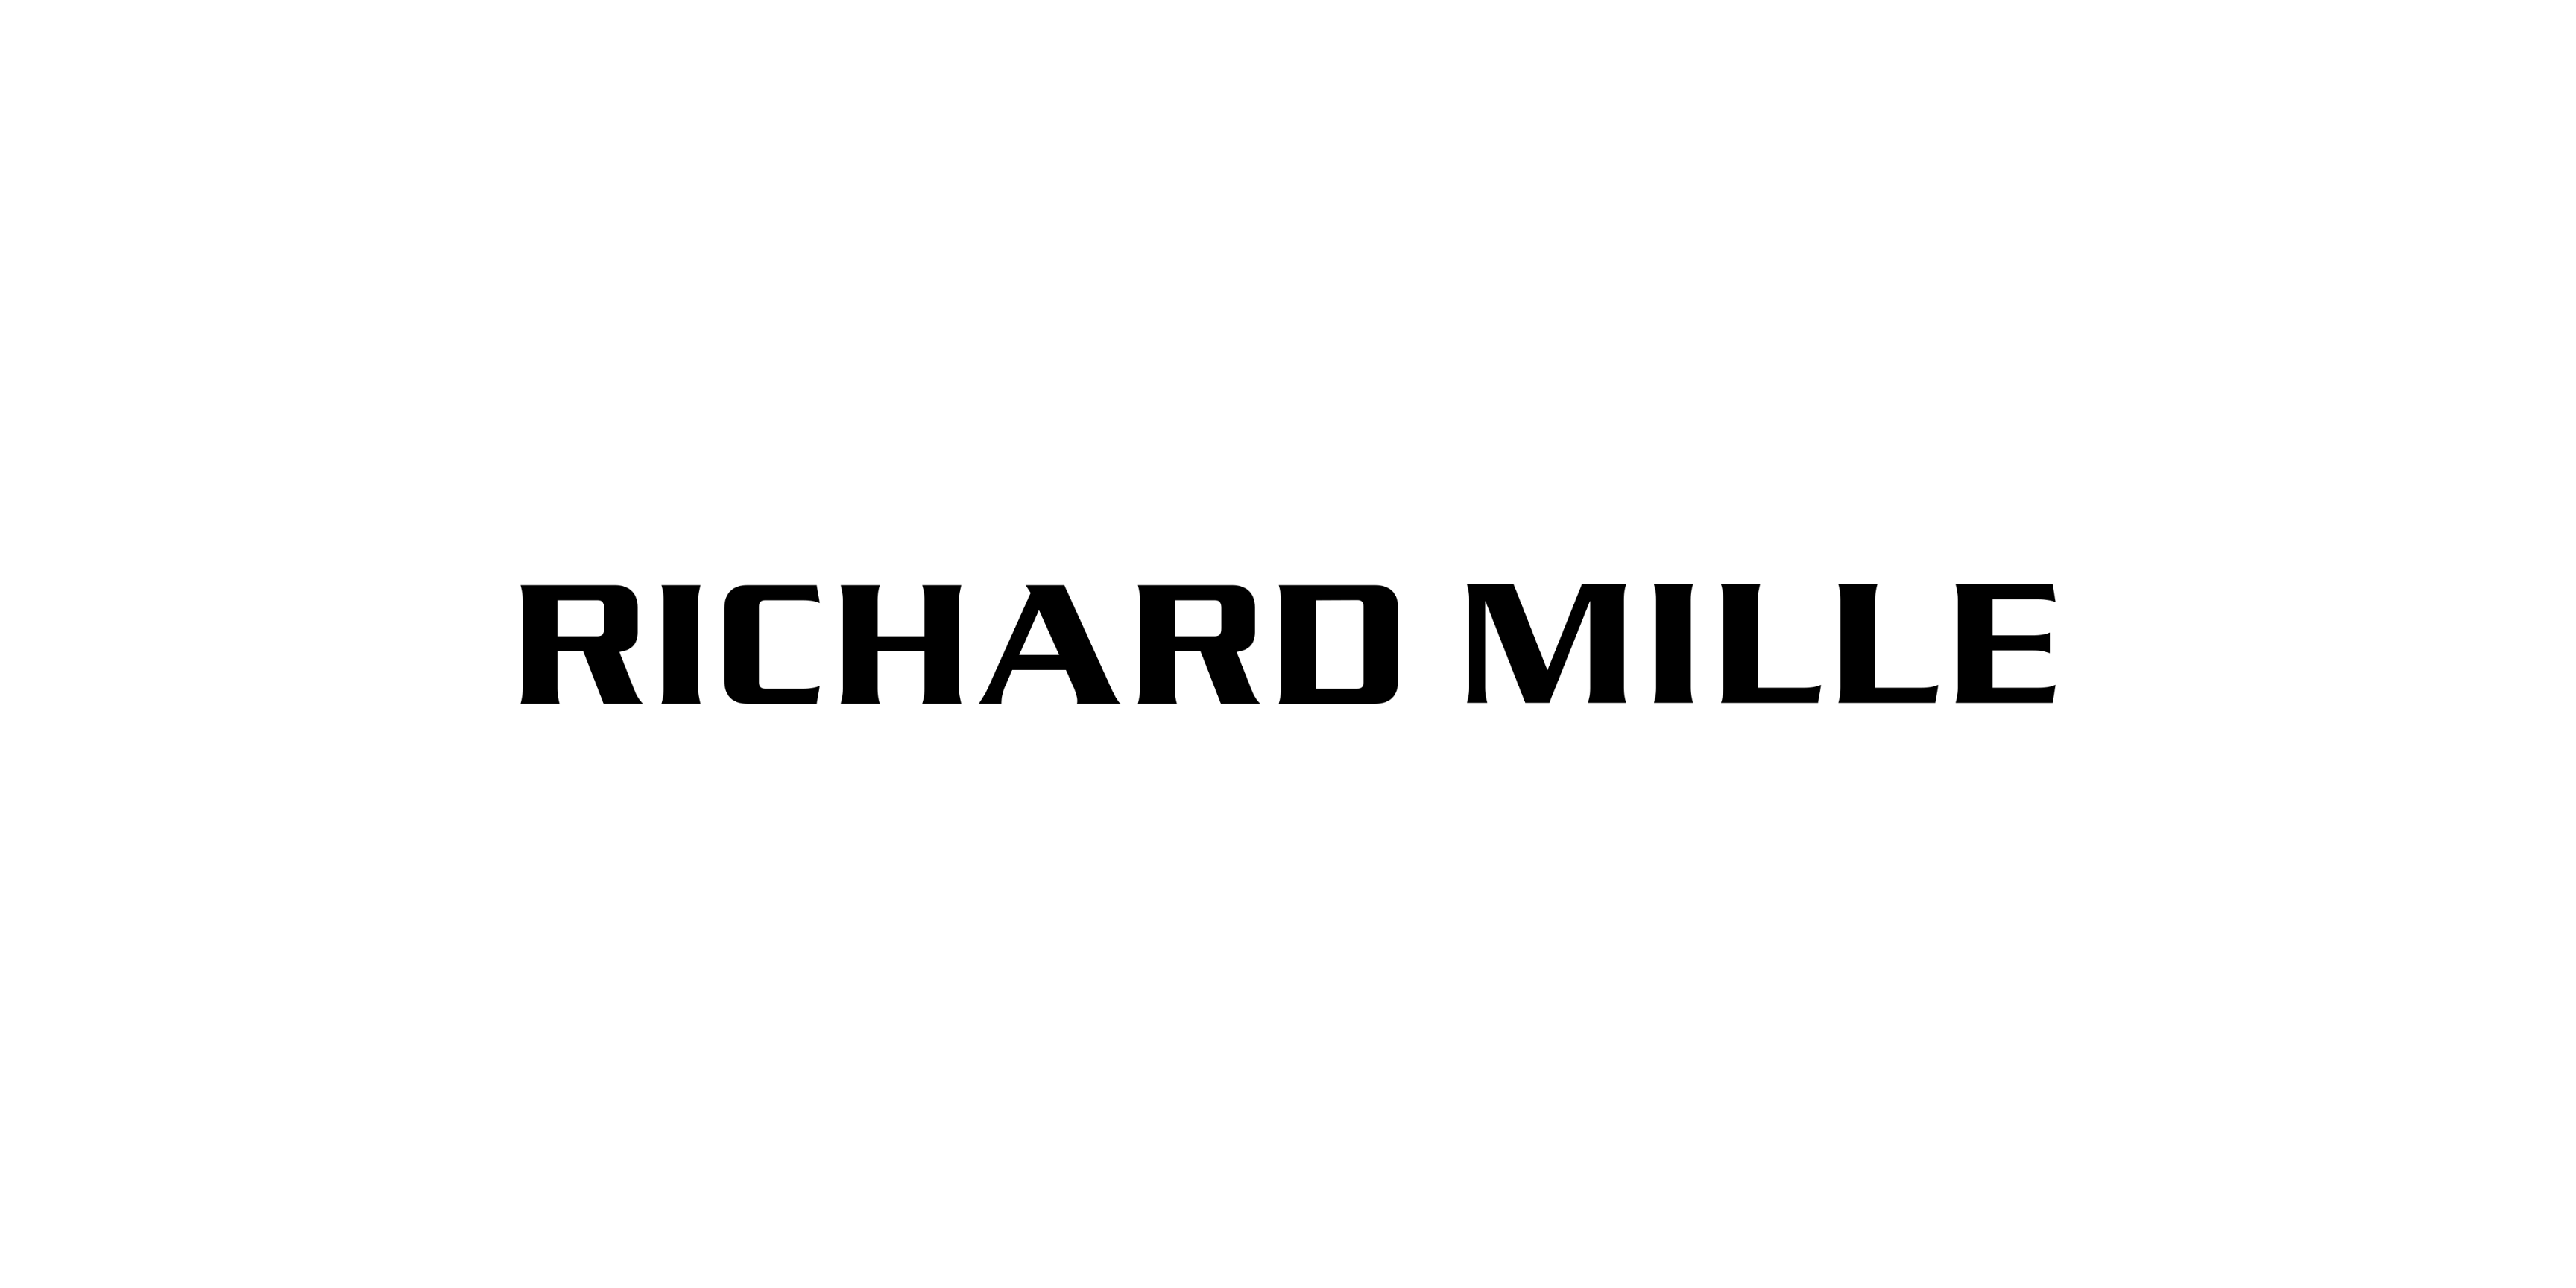 Replica Richard Mille